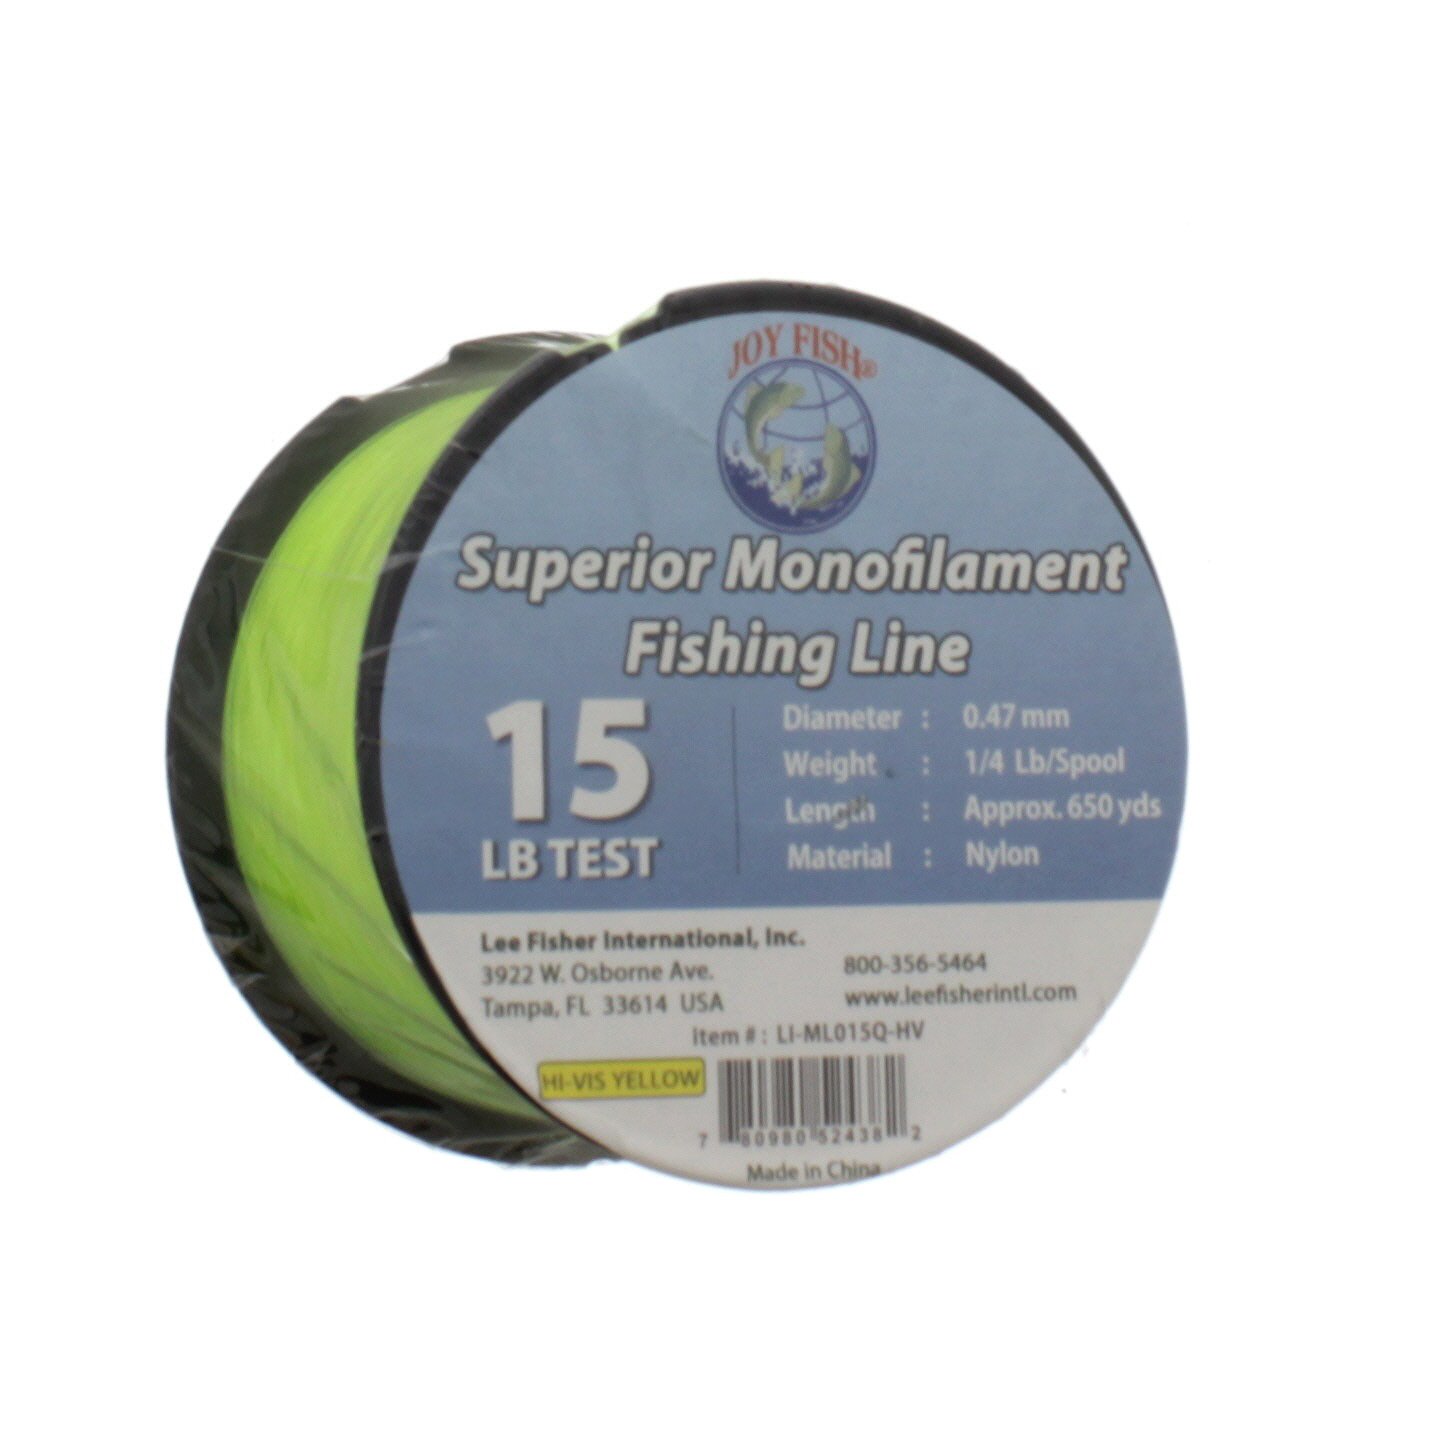 Joy Fish Superior Monofilament Fishing Line, Hi-Vis Yellow 15lb